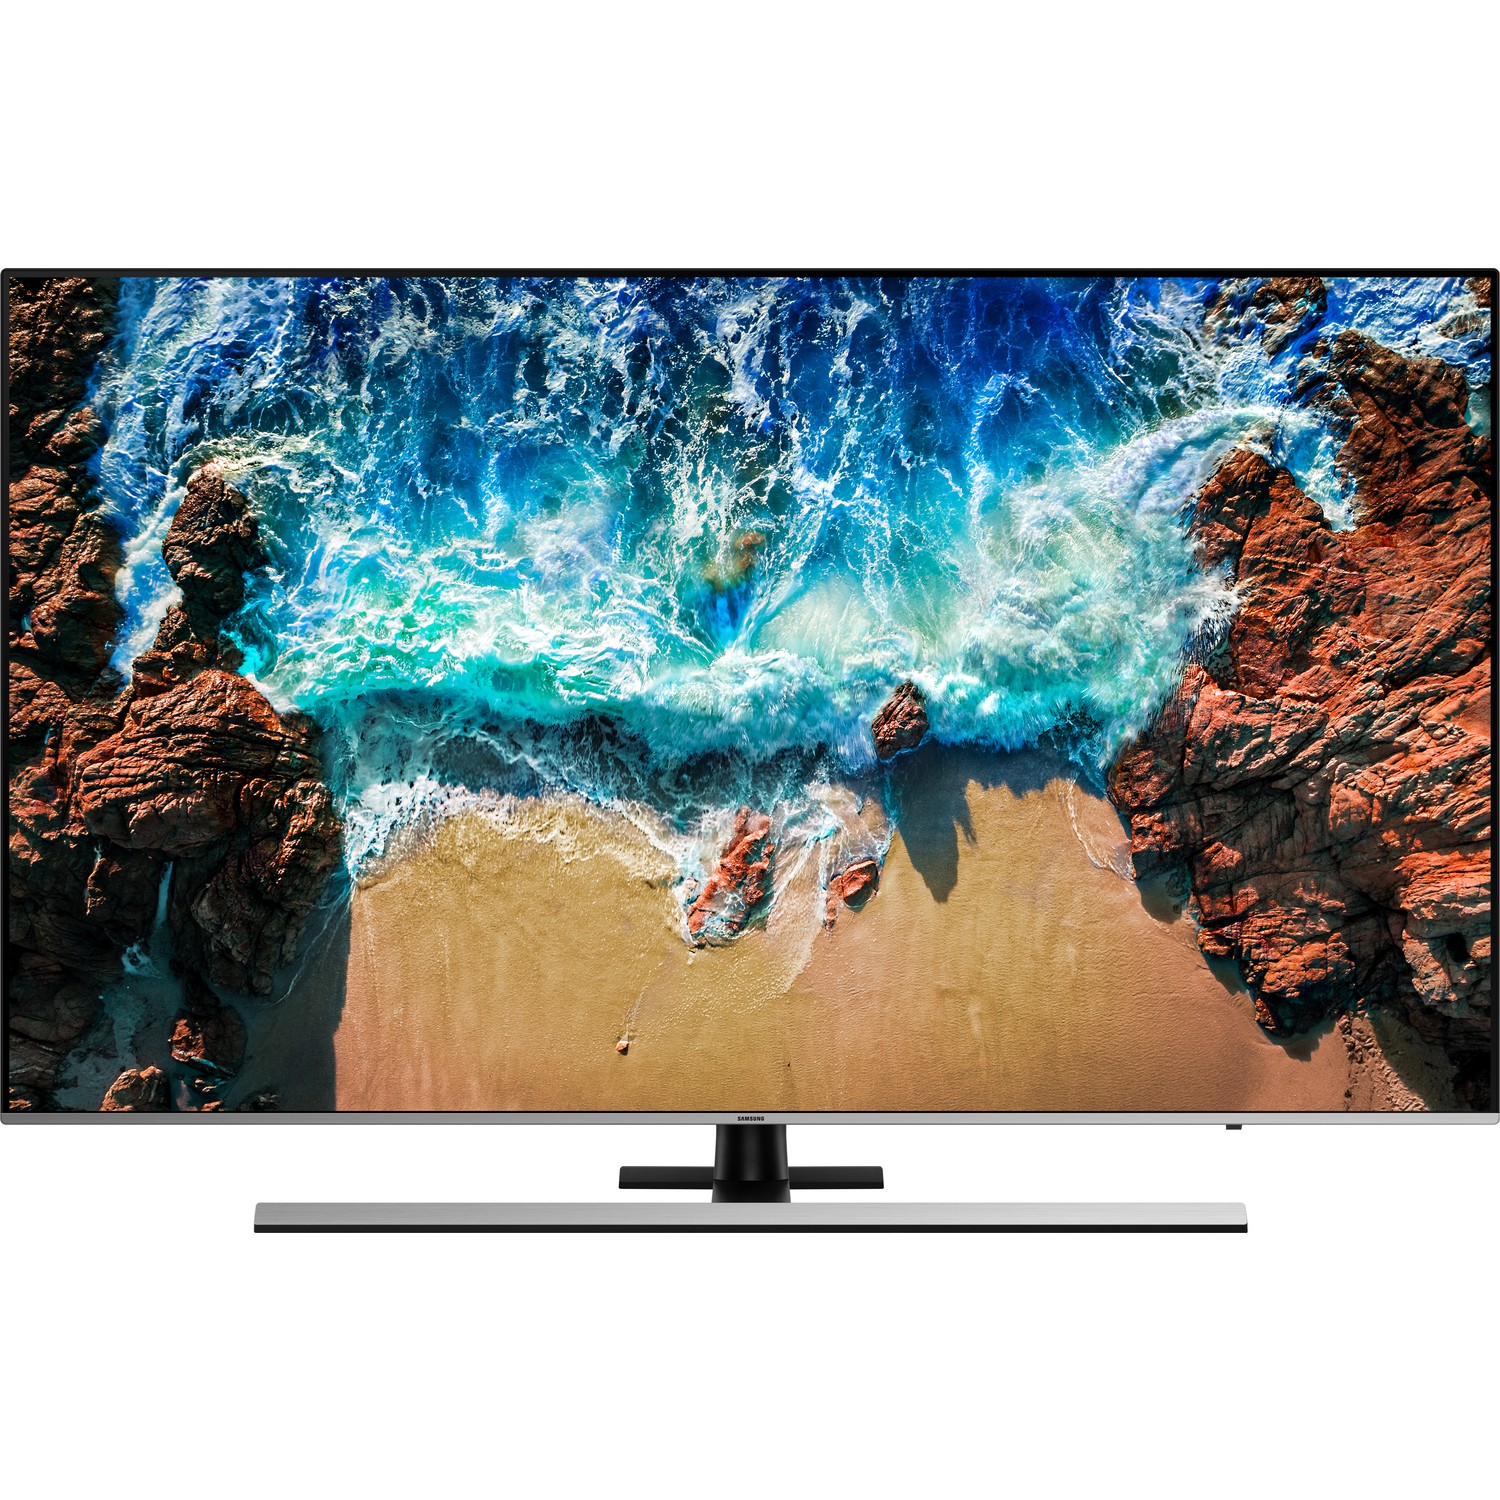 Samsung UE55NU8000 55" 4K Ultra HD Smart LED TV